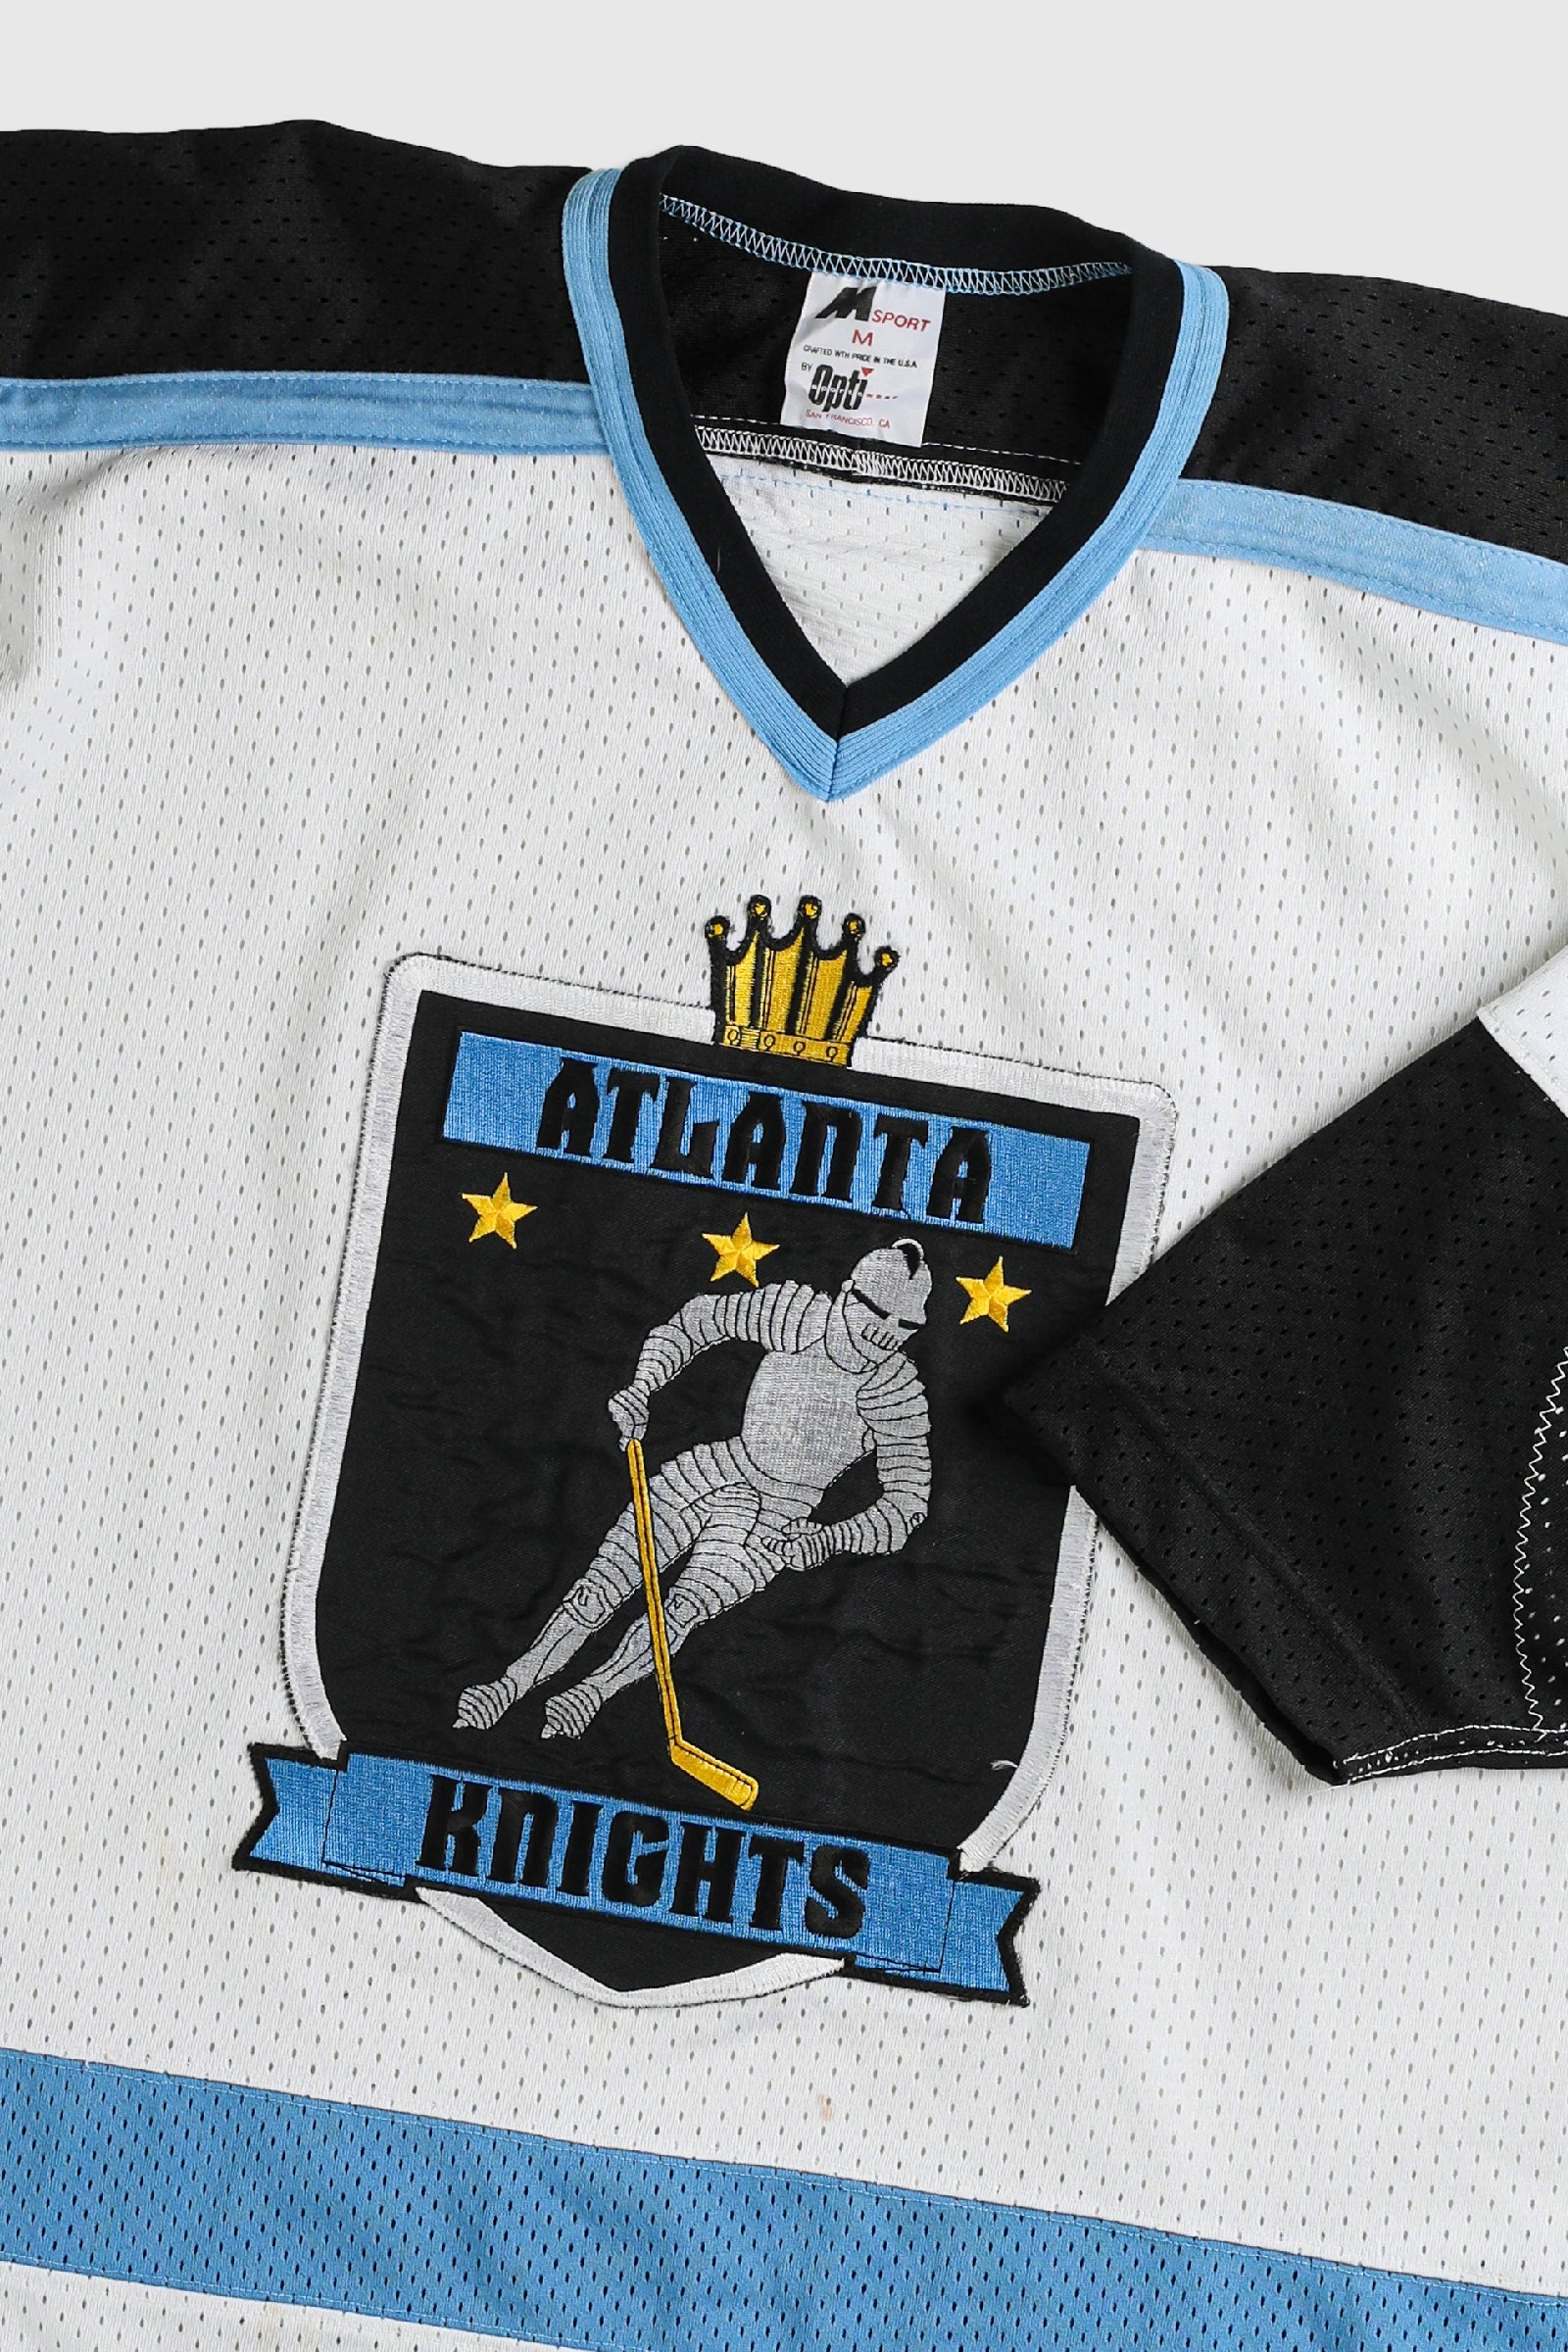 Atlanta Knights vintage hockey jersey